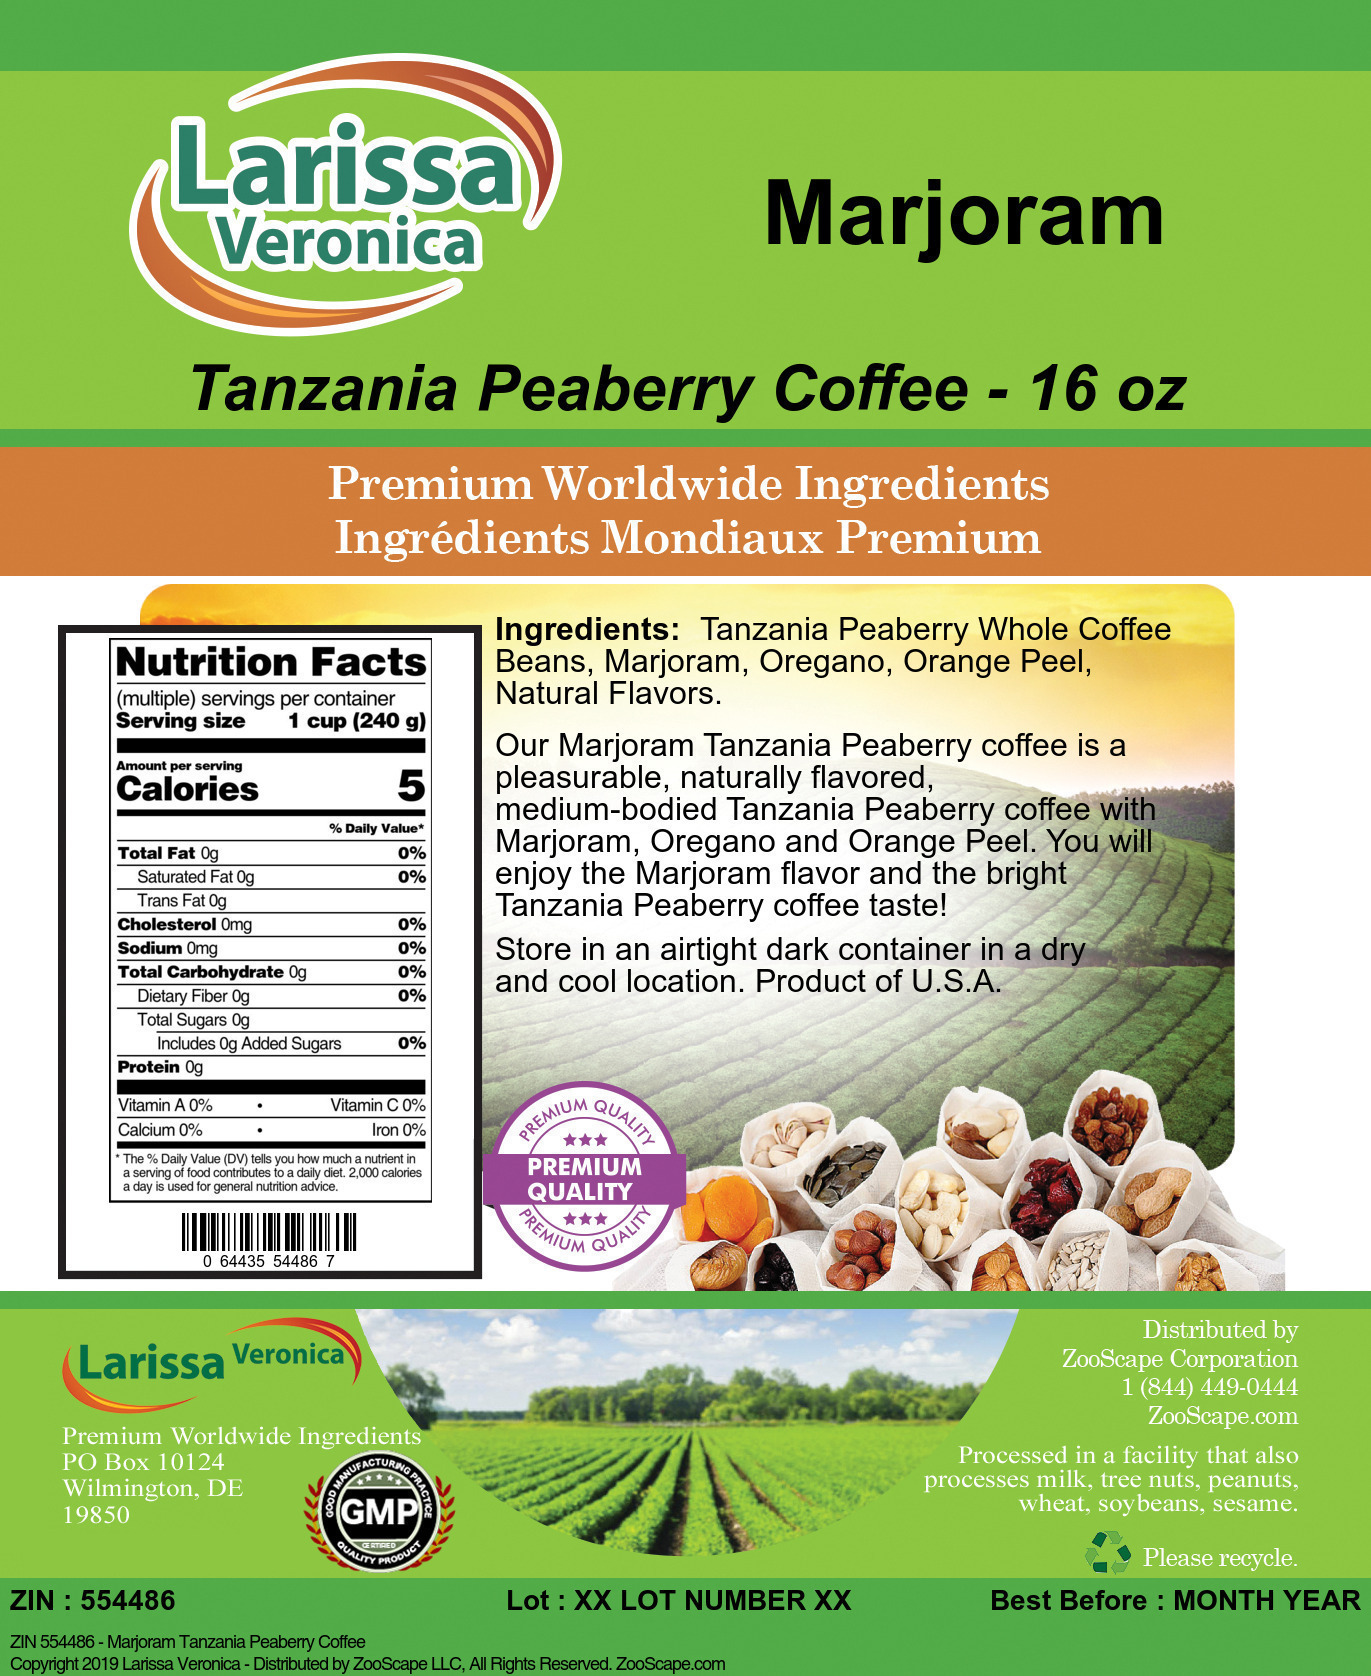 Marjoram Tanzania Peaberry Coffee - Label